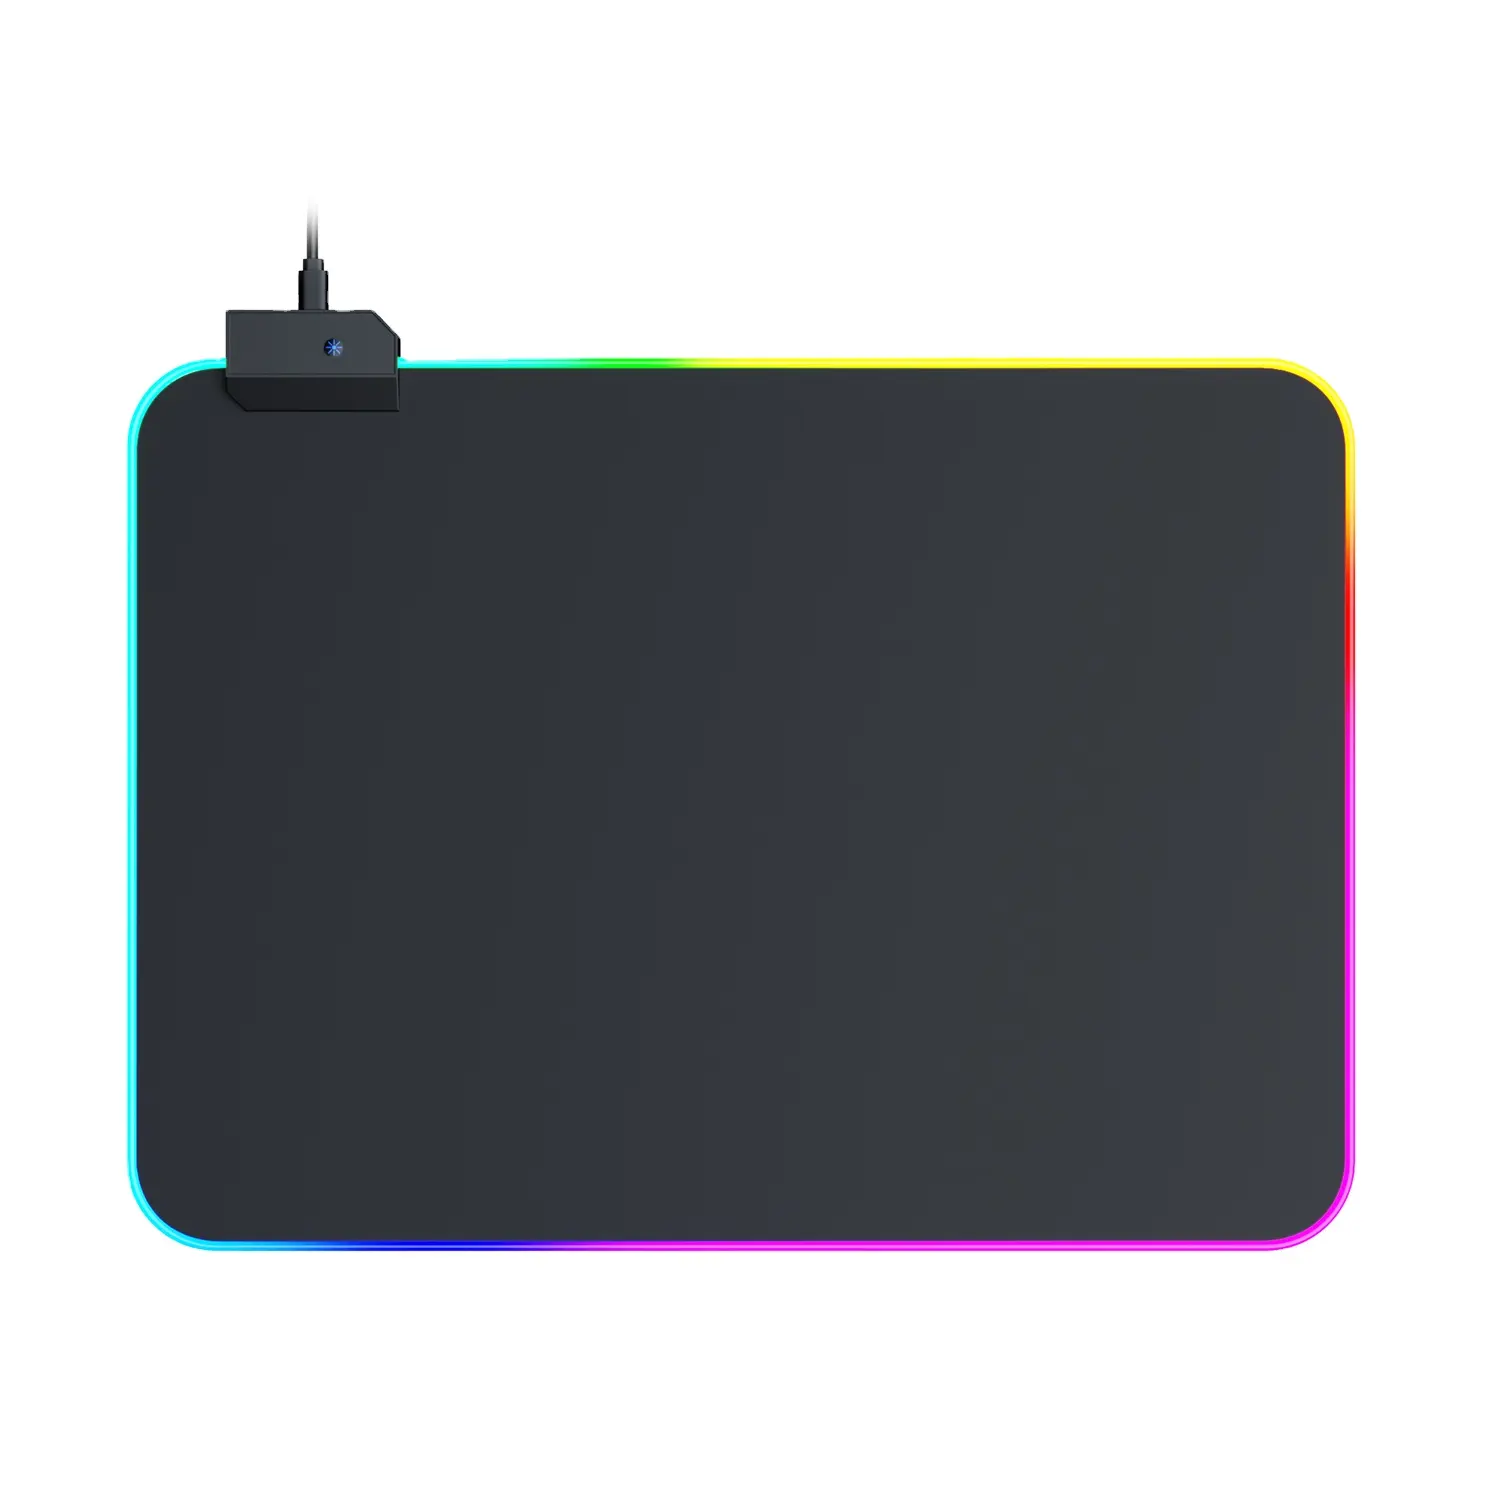 IMICE Mouse Pad PD-04 lampu RGB, bantalan tetikus bermain game warna hitam 30*25 untuk komputer Laptop